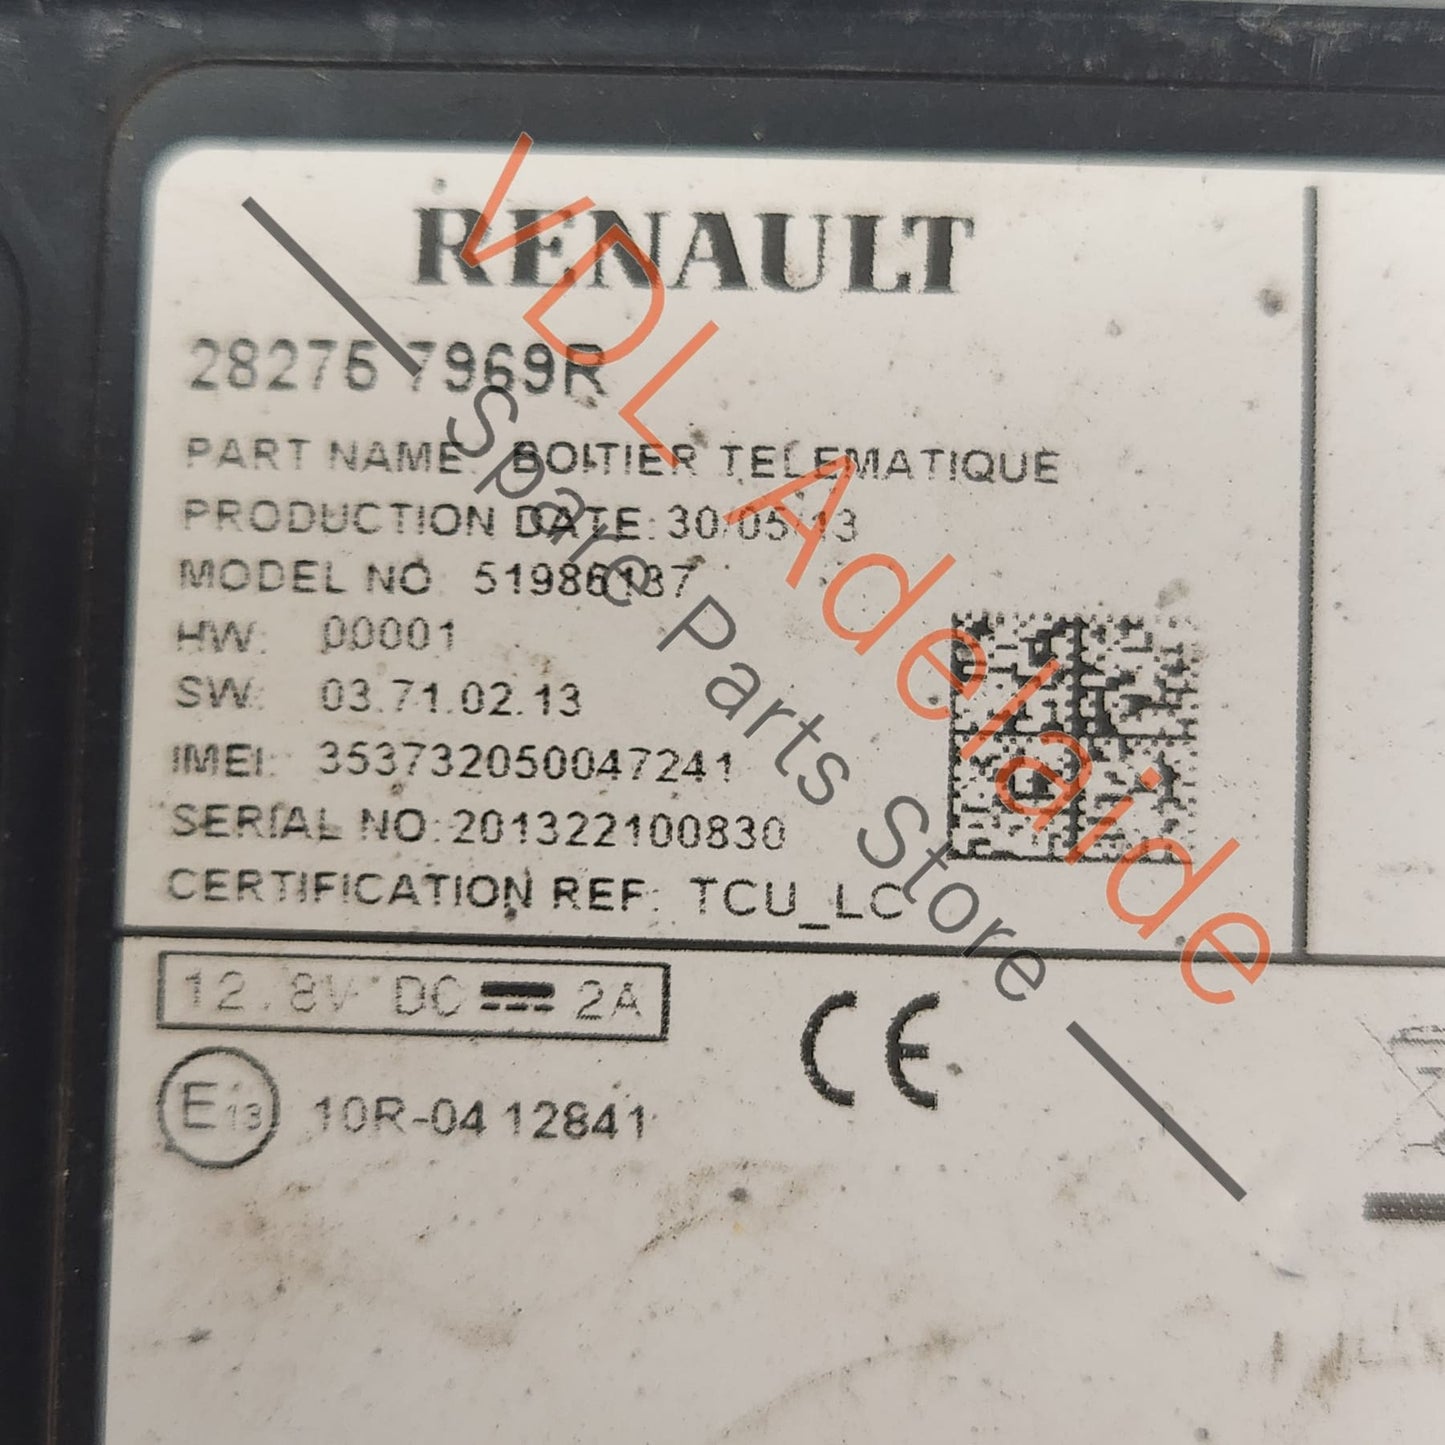 282767969R Renault Megane 3 X95 RS265 Boitier Telematique Antenna Module 282767969R